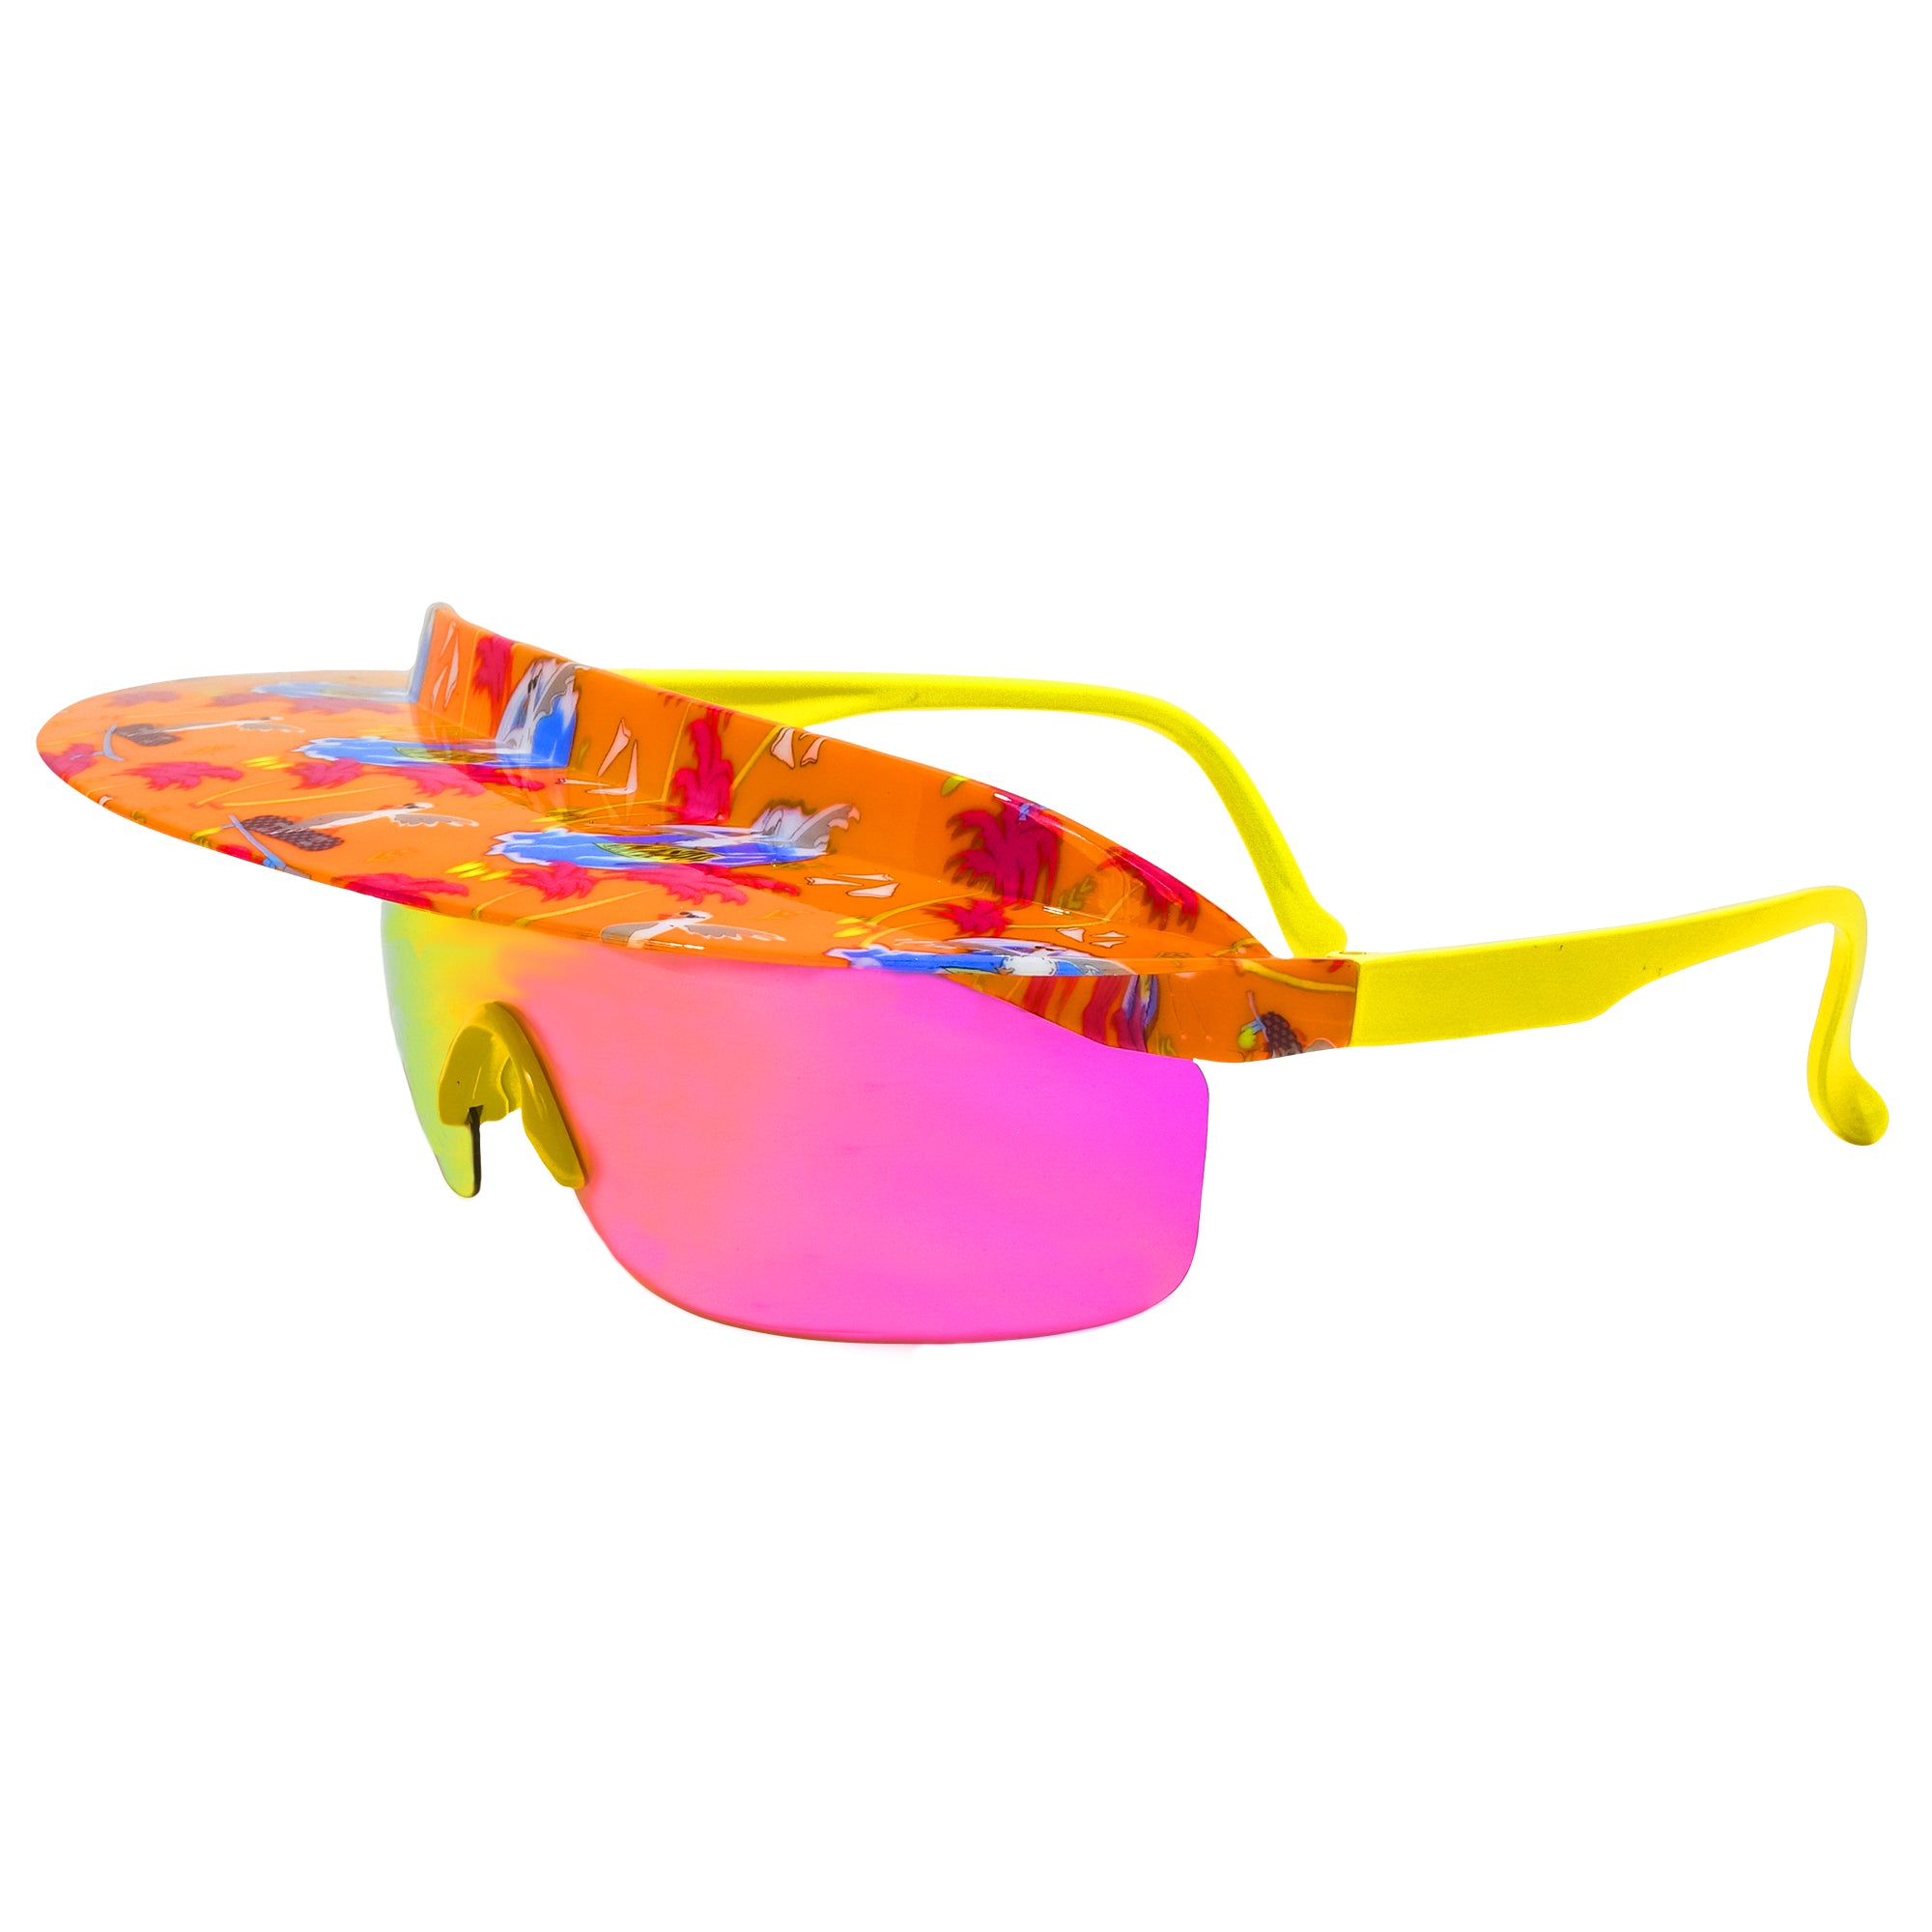 Surfin Birds throwback beach ski retro visor shades. Sunglasses polarized boating ski shades. Orange yellow pink retro seagull bird surfing.